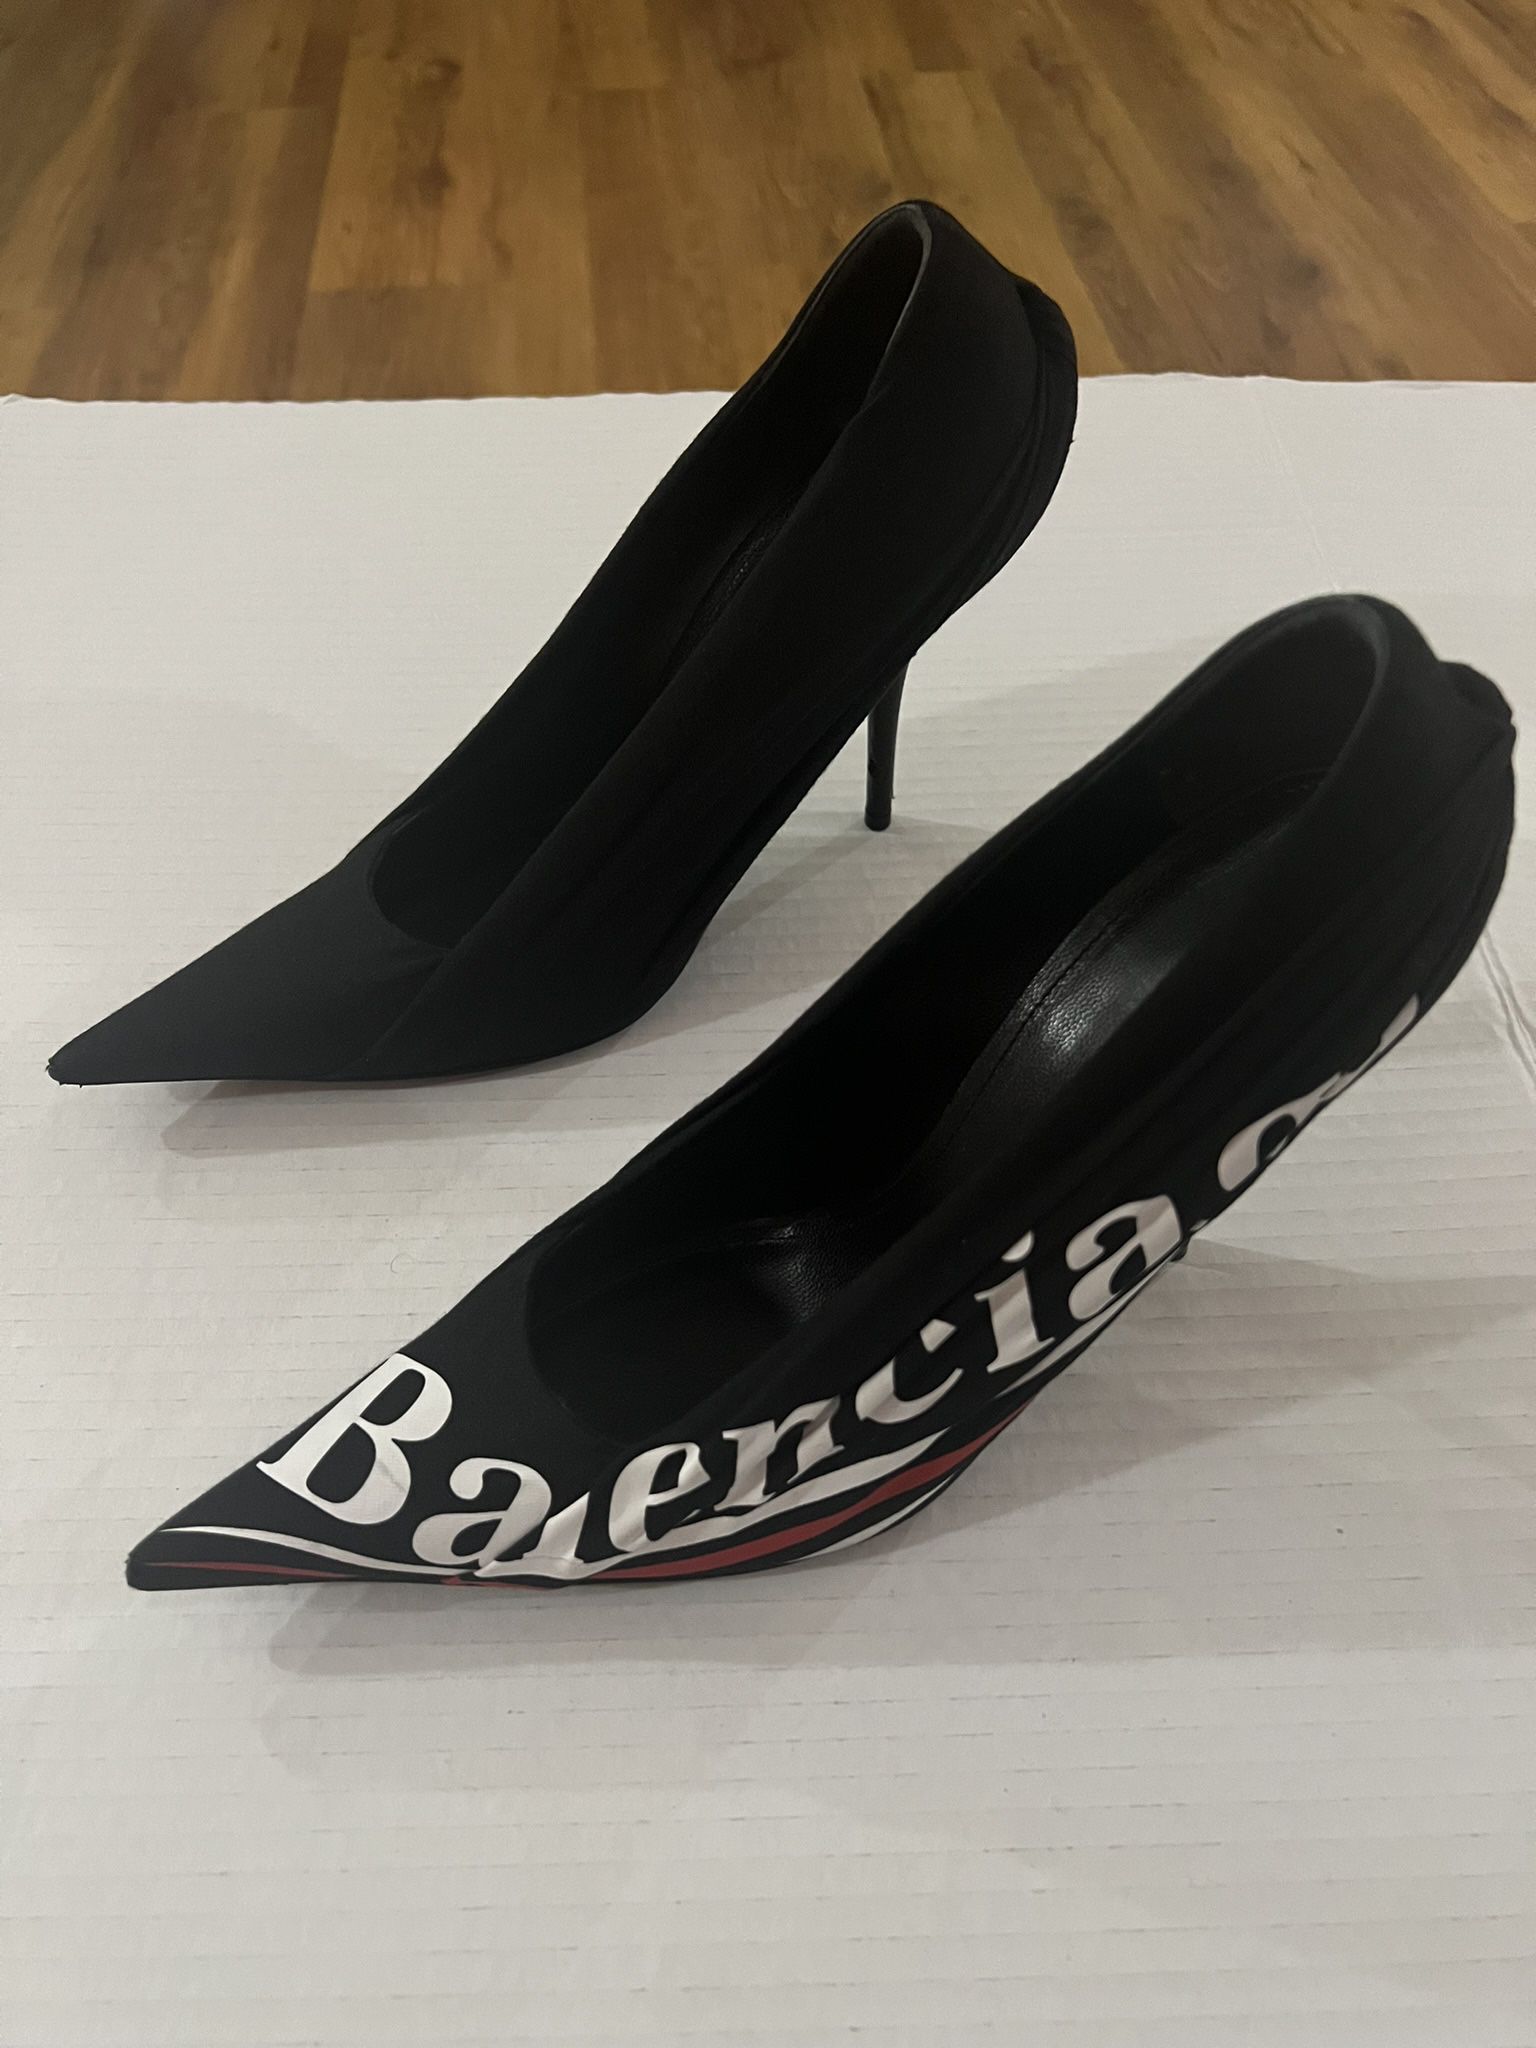 🔥Pre-Loved Balenciaga Knife Cloth Heel Size 8.5 US 38.5. Scuff Marks At Toe